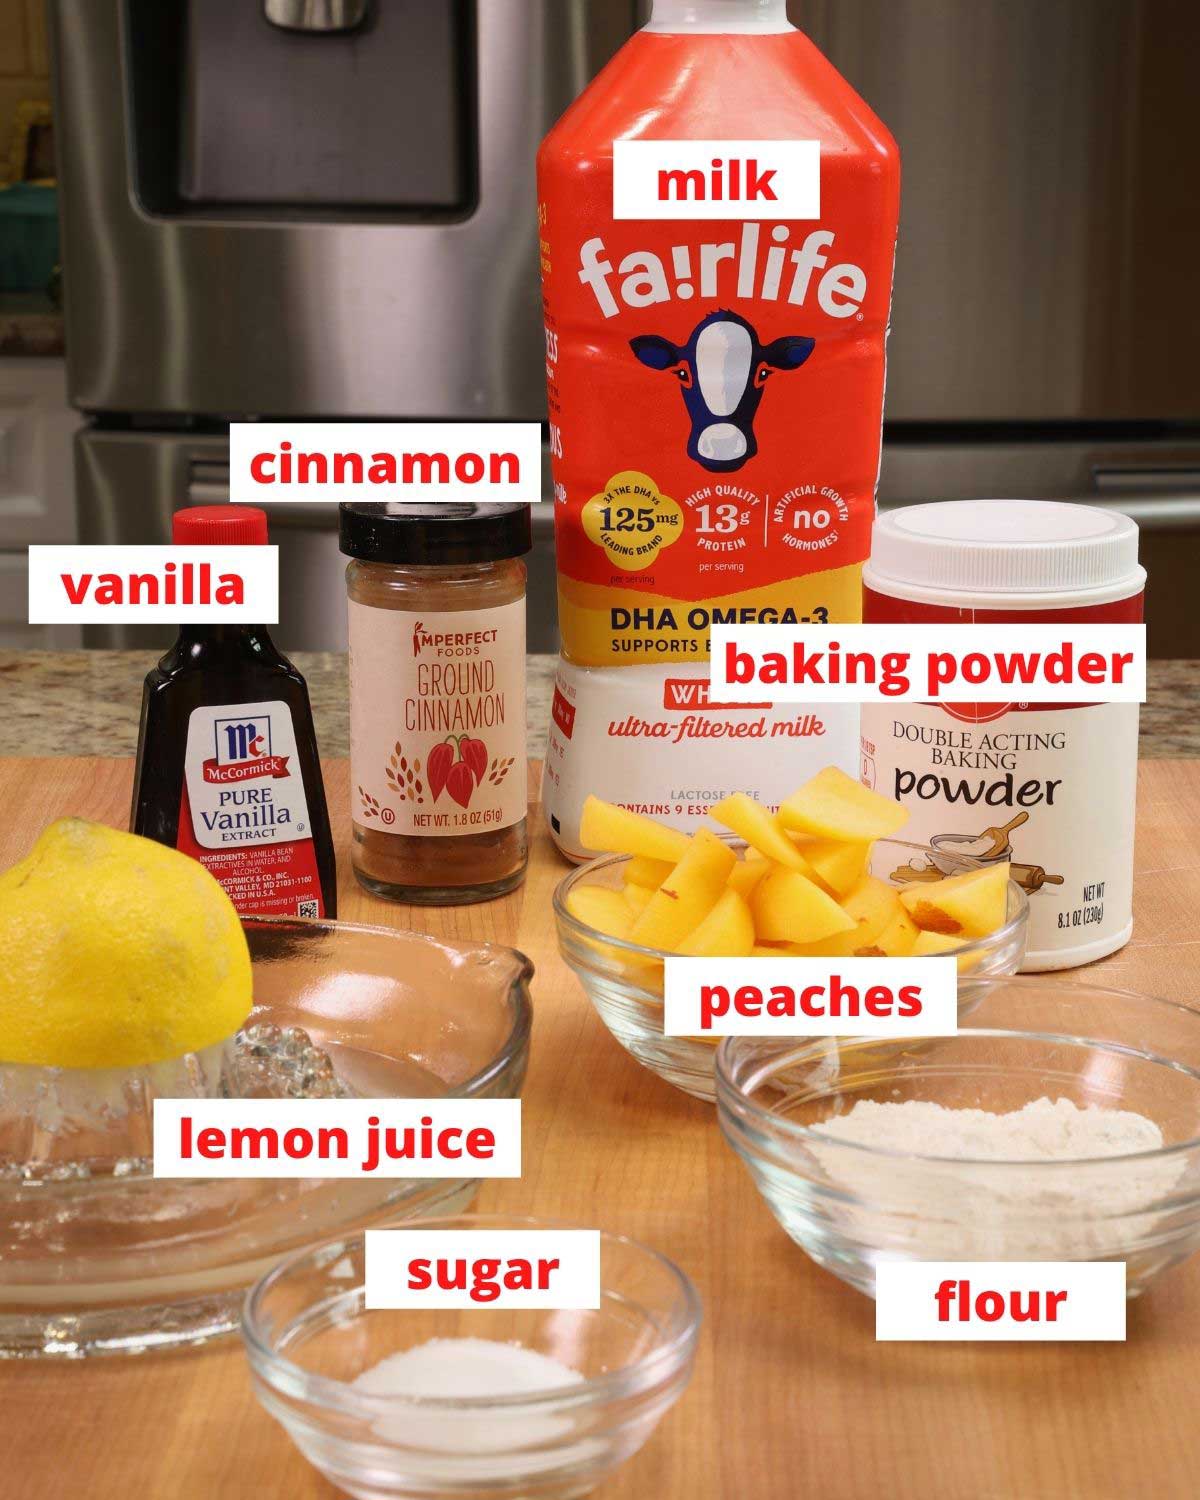 flour, peaches, lemon juice, vanilla, baking powder and sugar on a wooden cutting board.